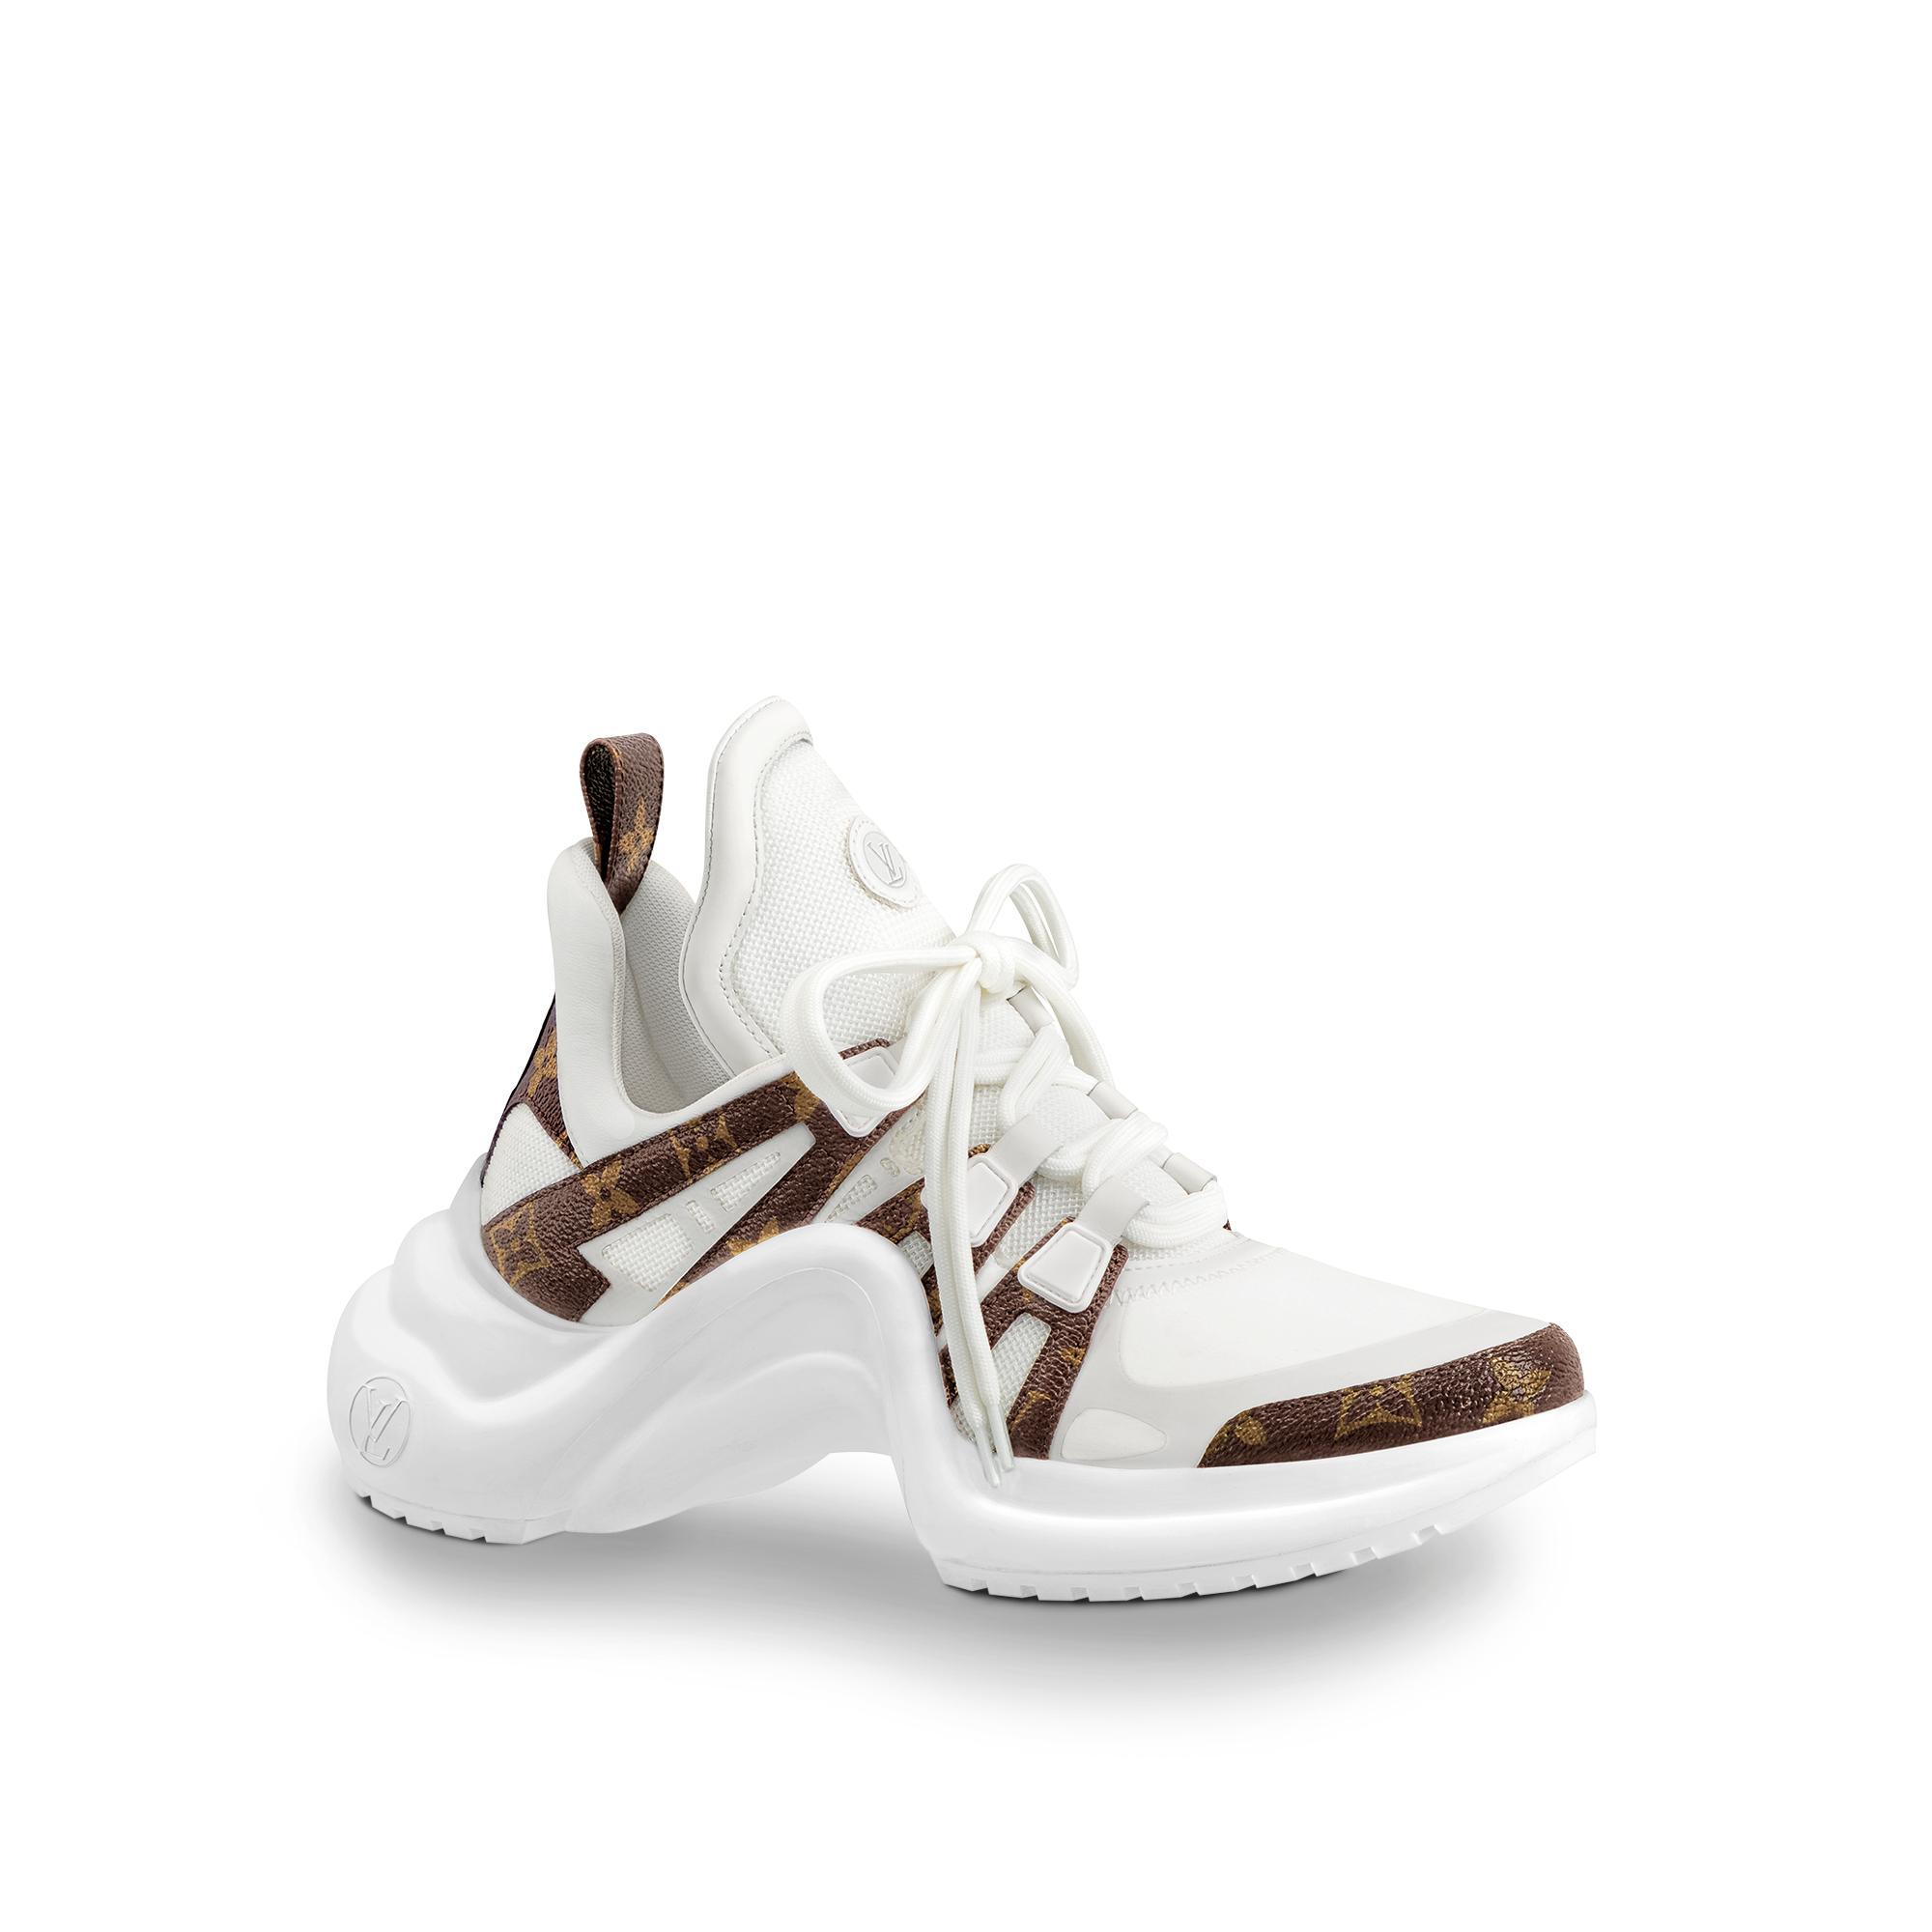 Louis Vuitton Lv Archlight Sneaker In White | ModeSens